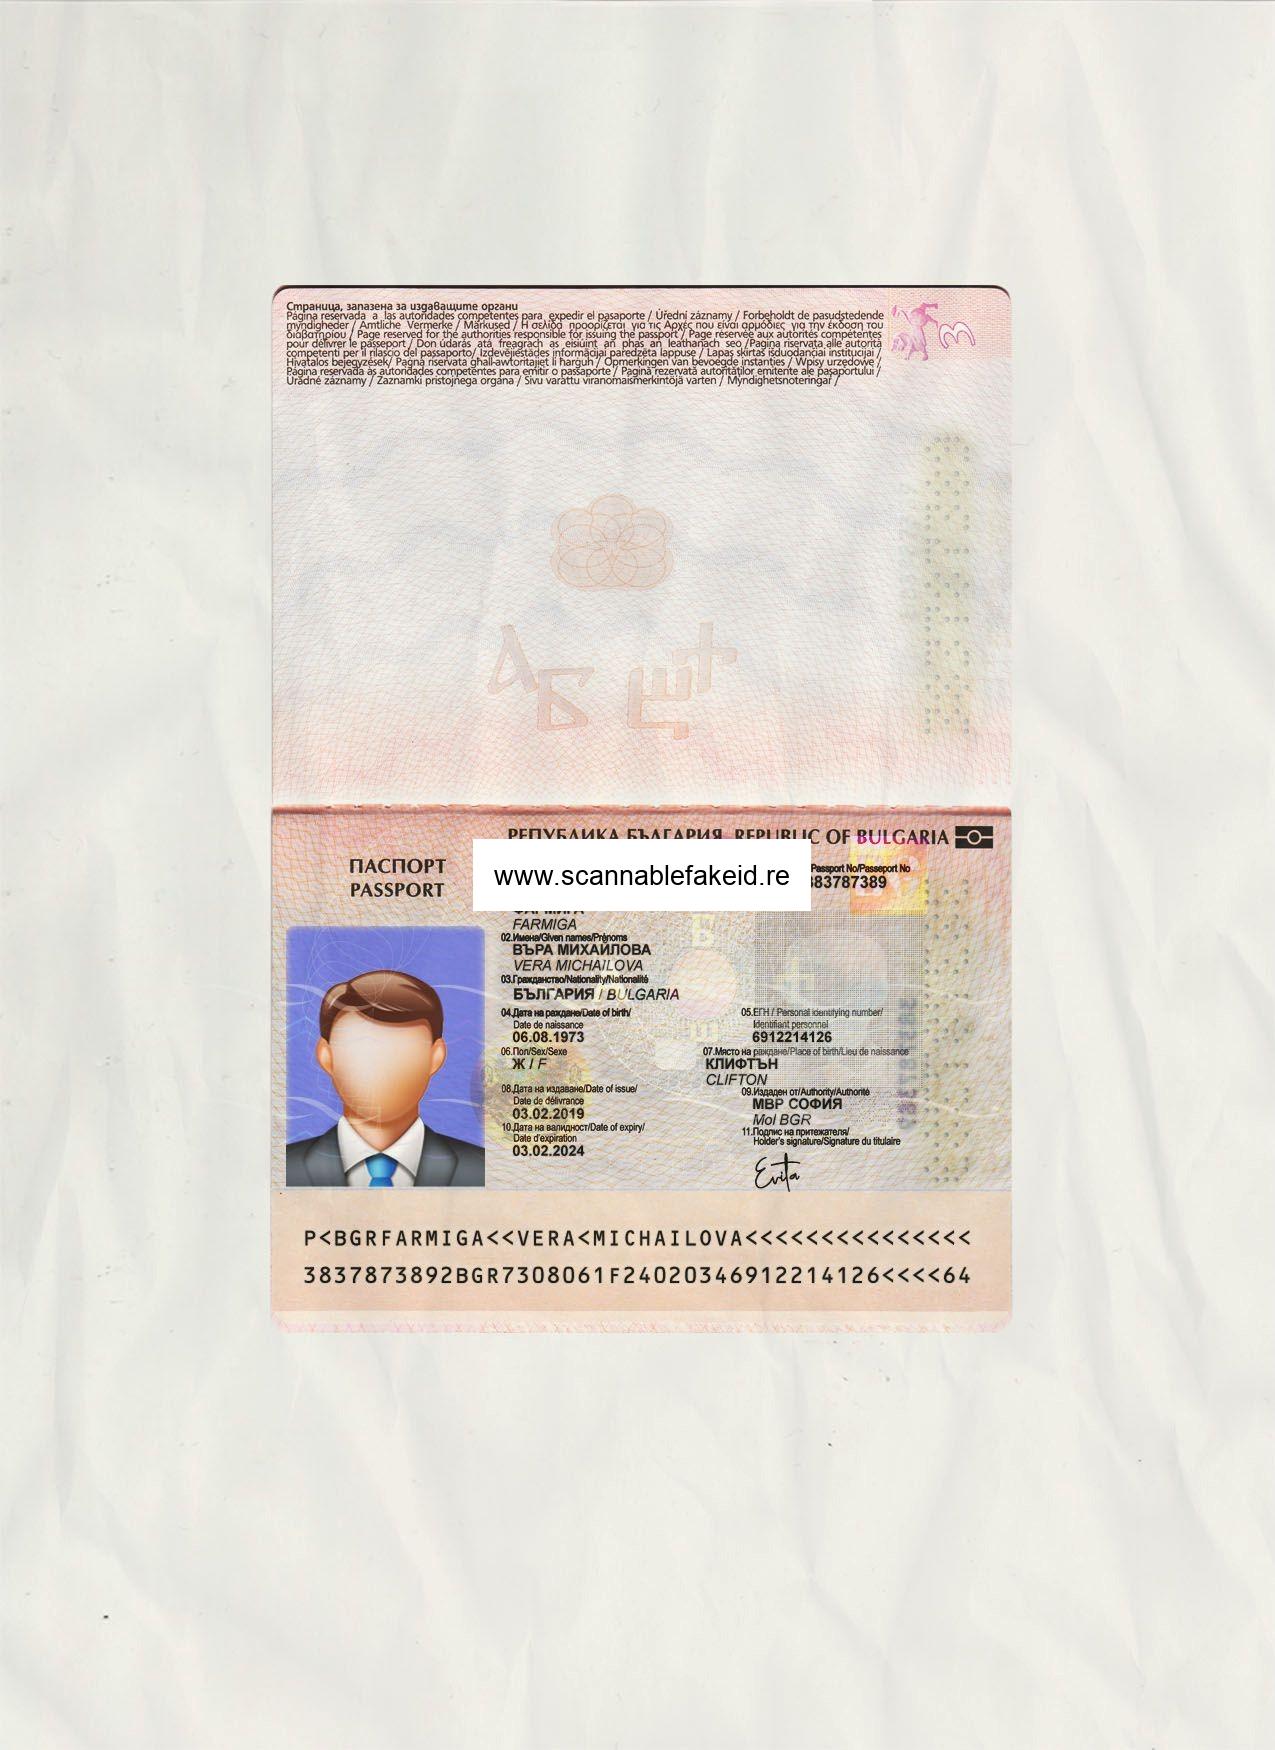 Bulgaria Fake Passport - Best Scannable Fake Id - Buy Fake IDs Online